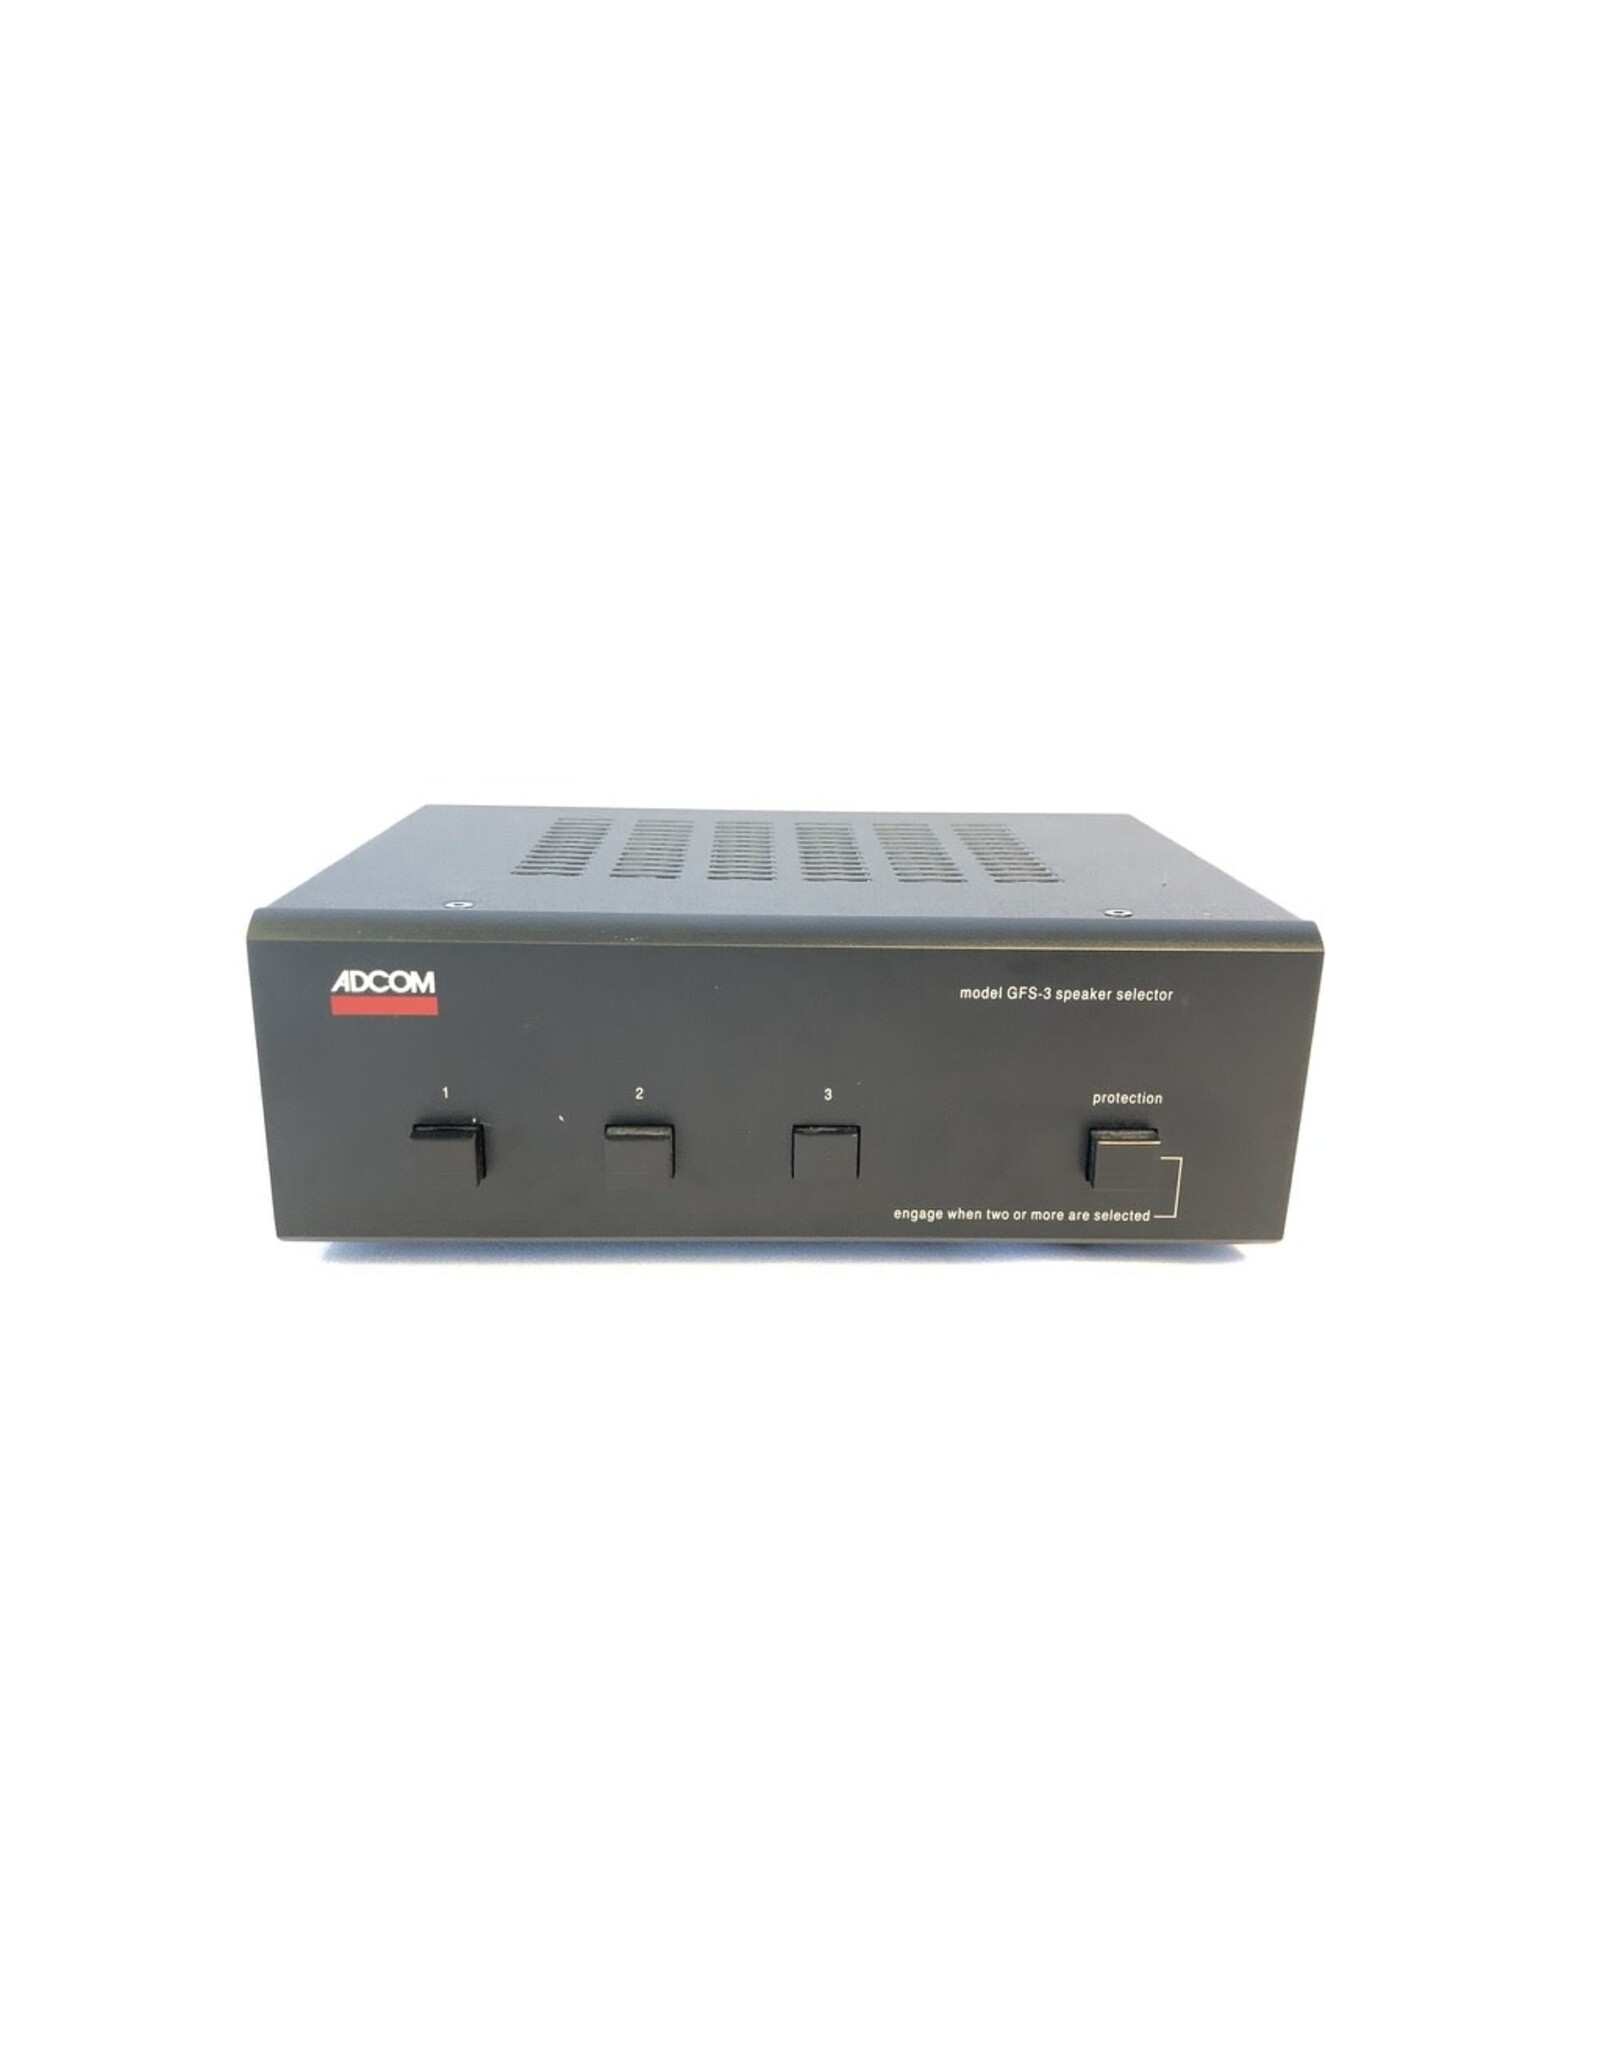 Adcom Adcom GFS-3 Speaker Selector Switch USED